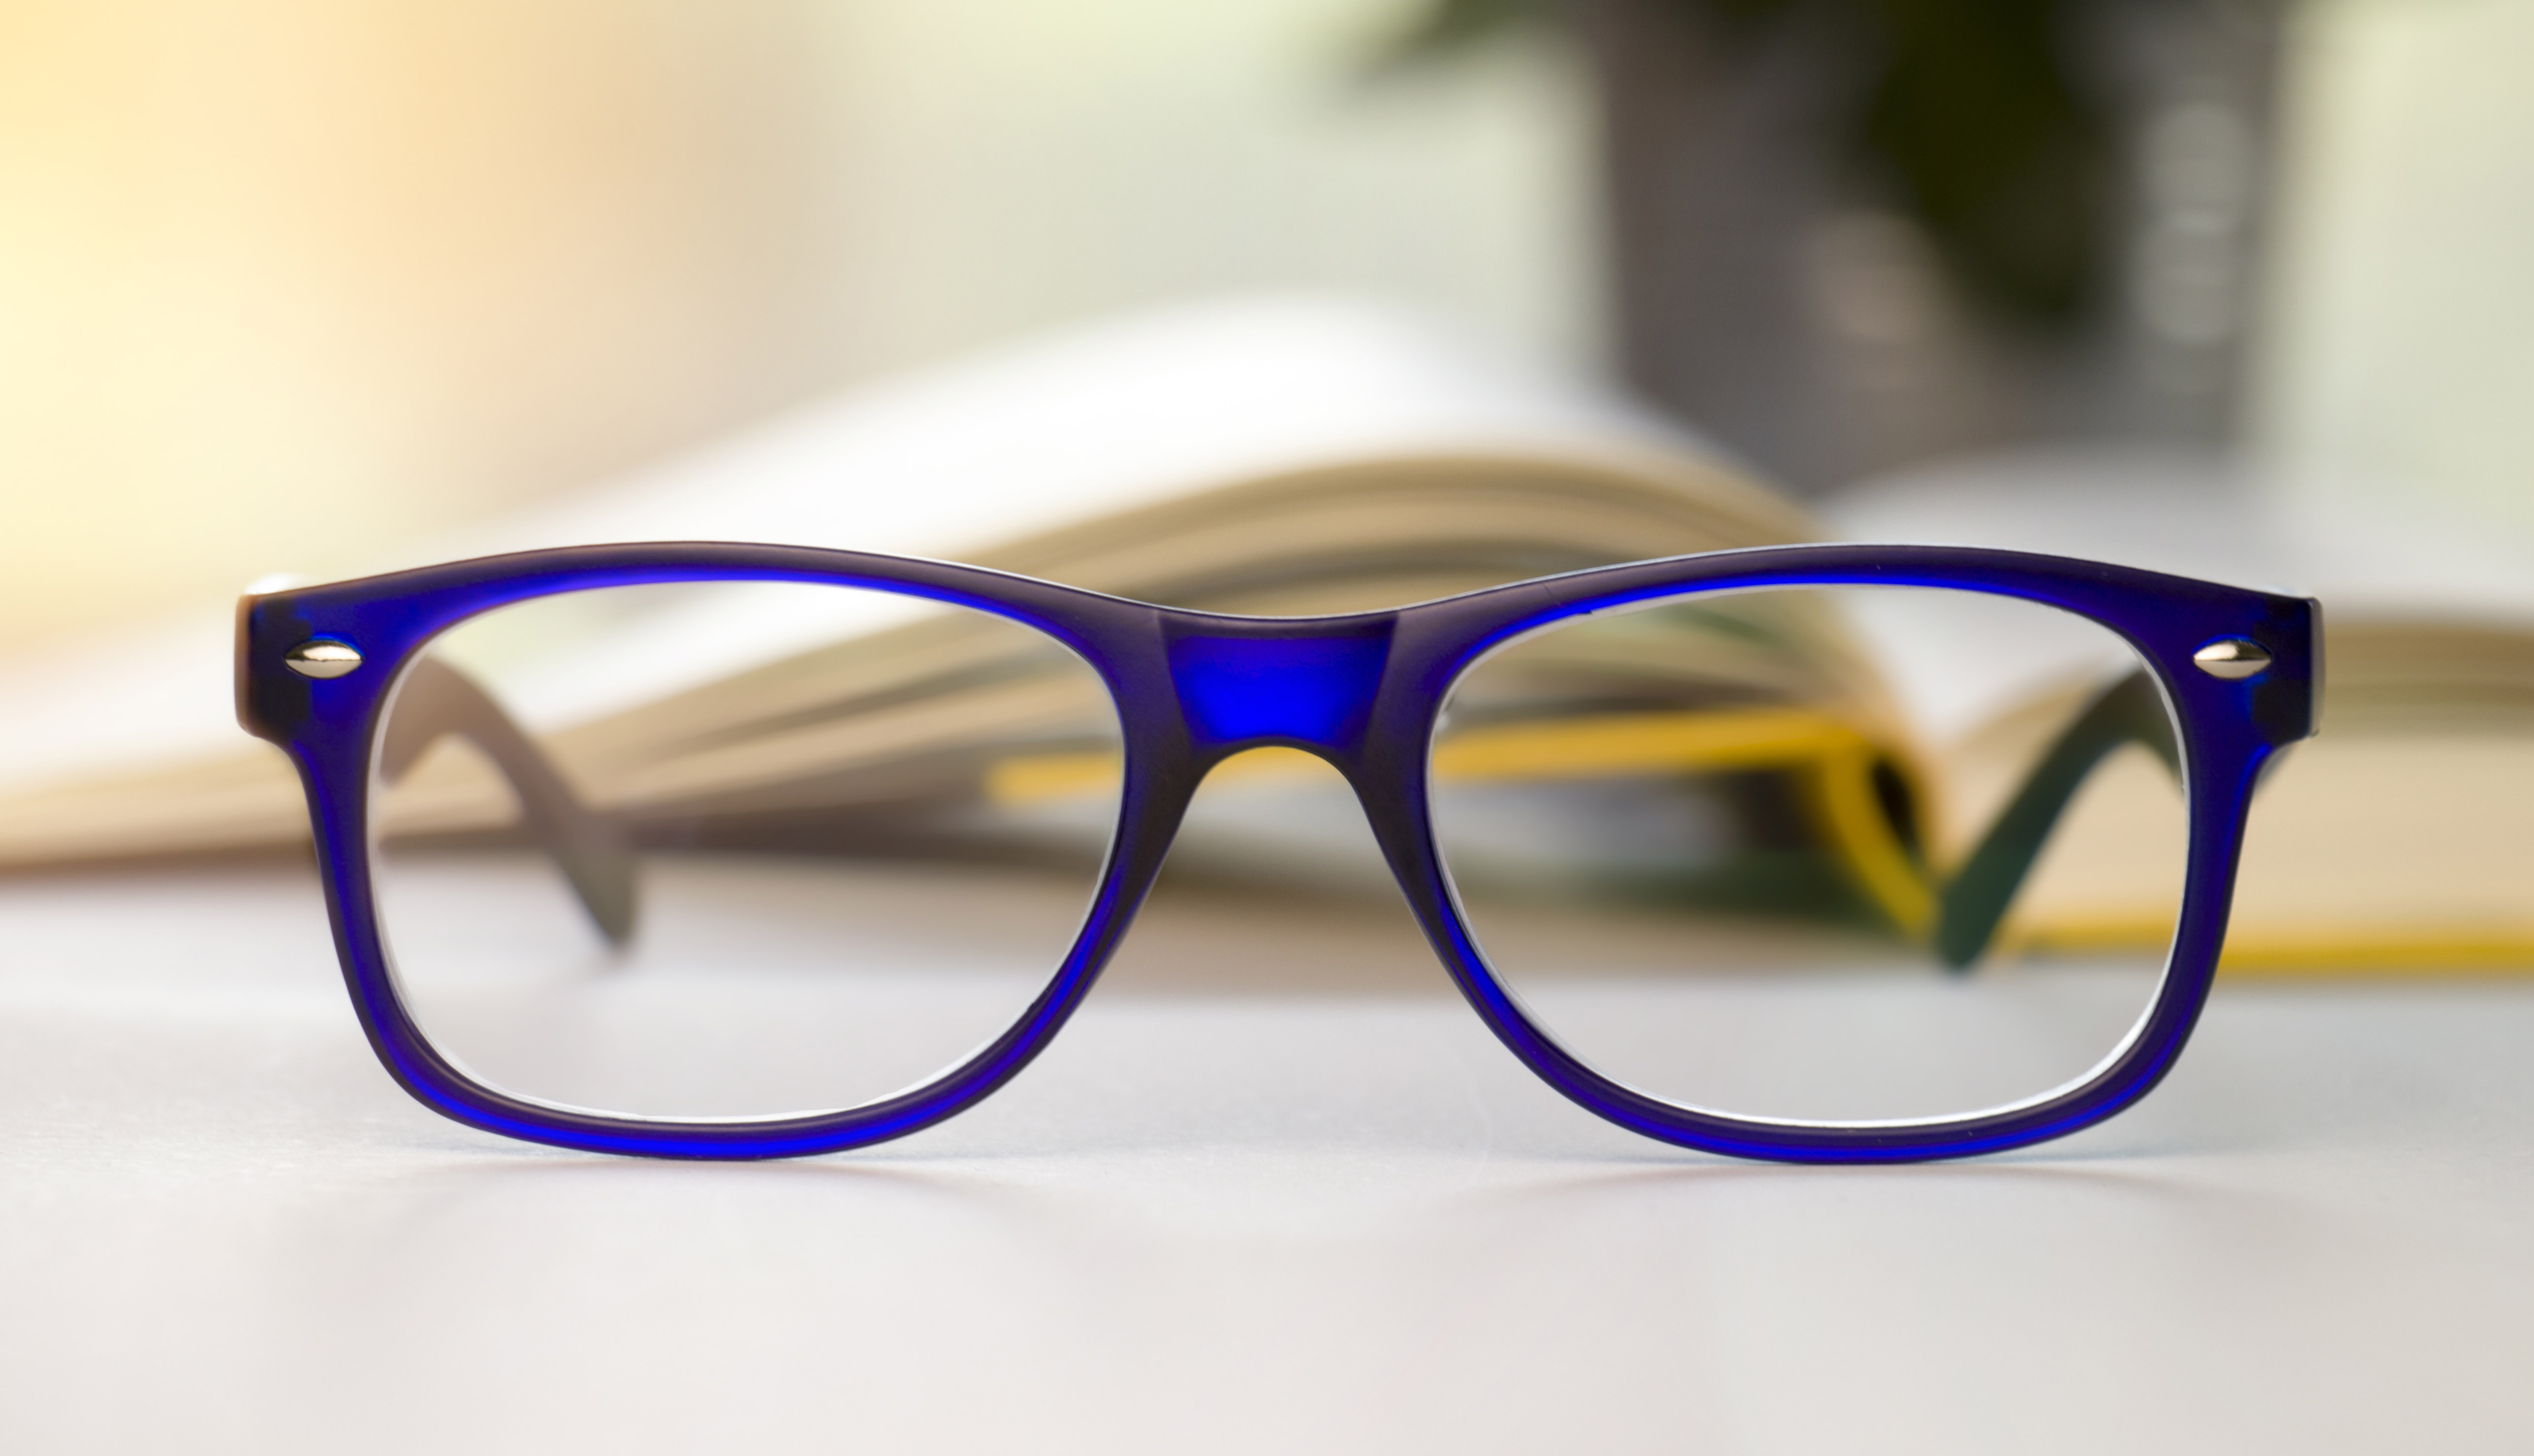 Stylish blue glasses on a blur background.